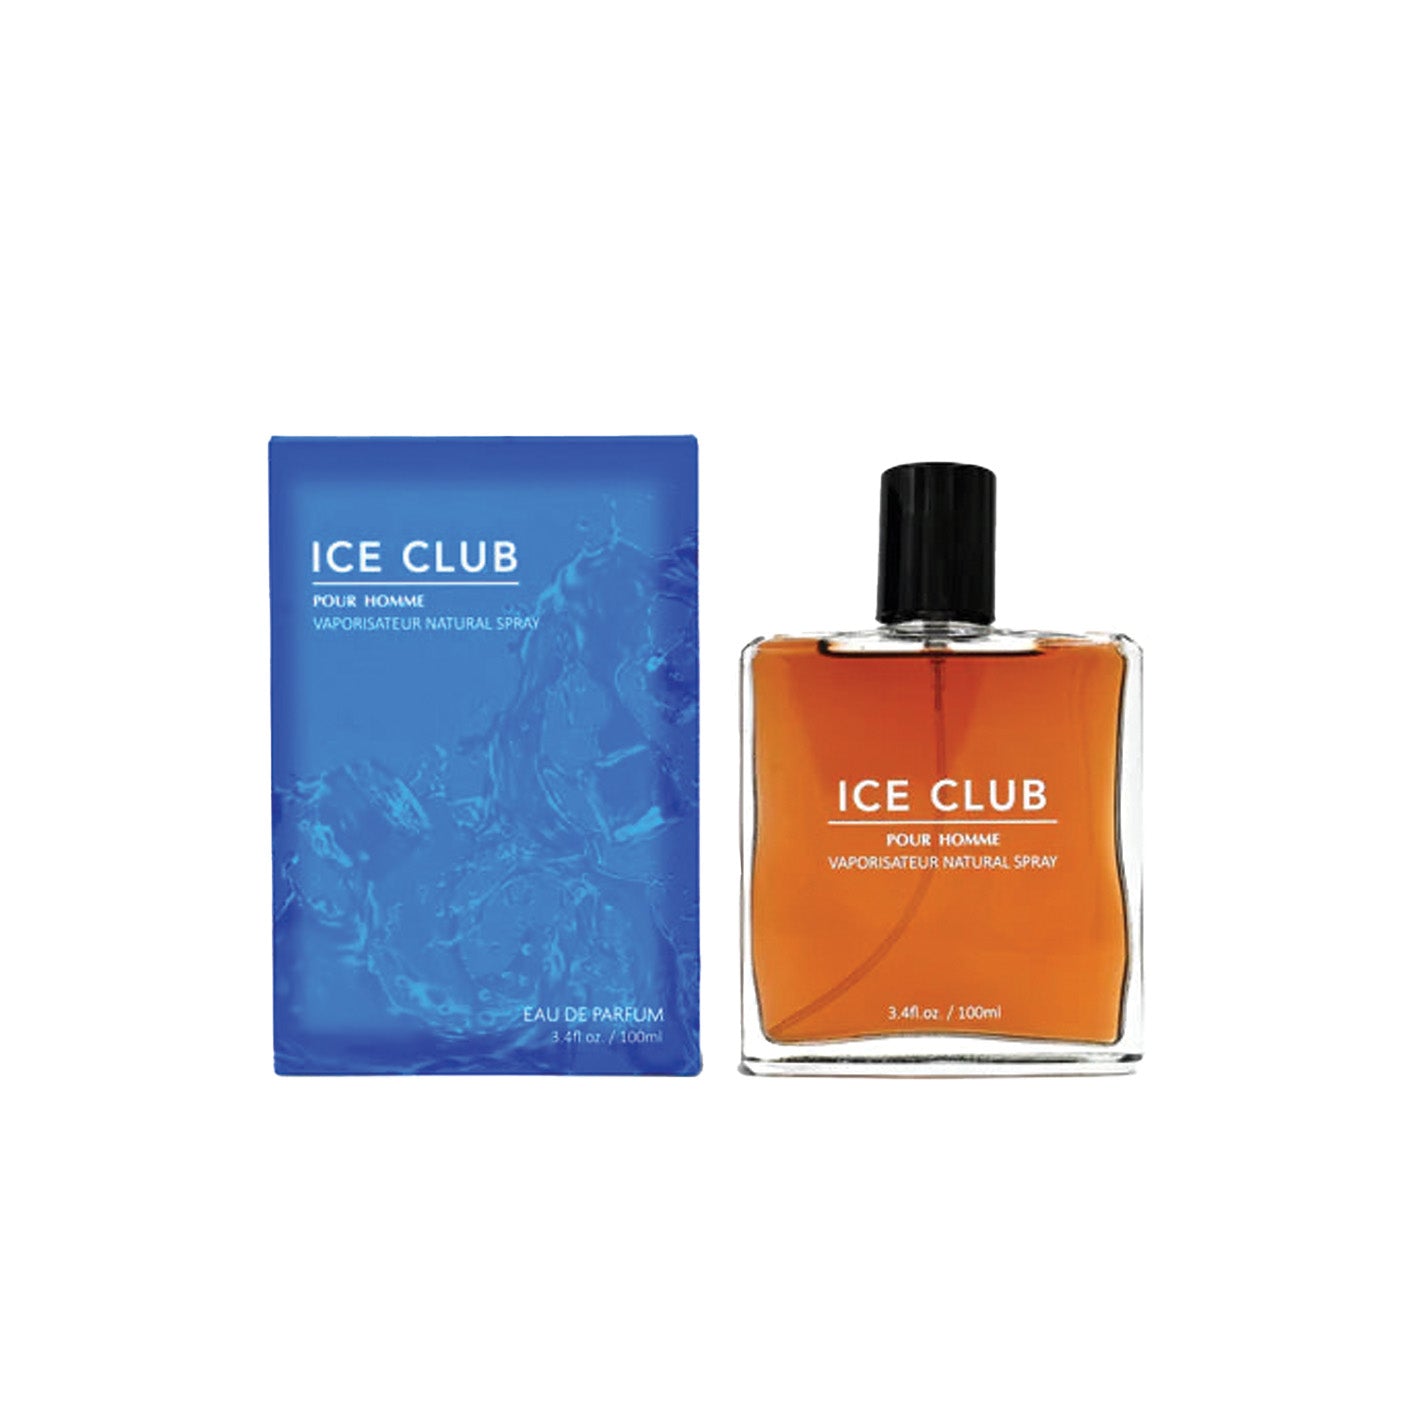 Perfume (Ice Club) 100ml 6388